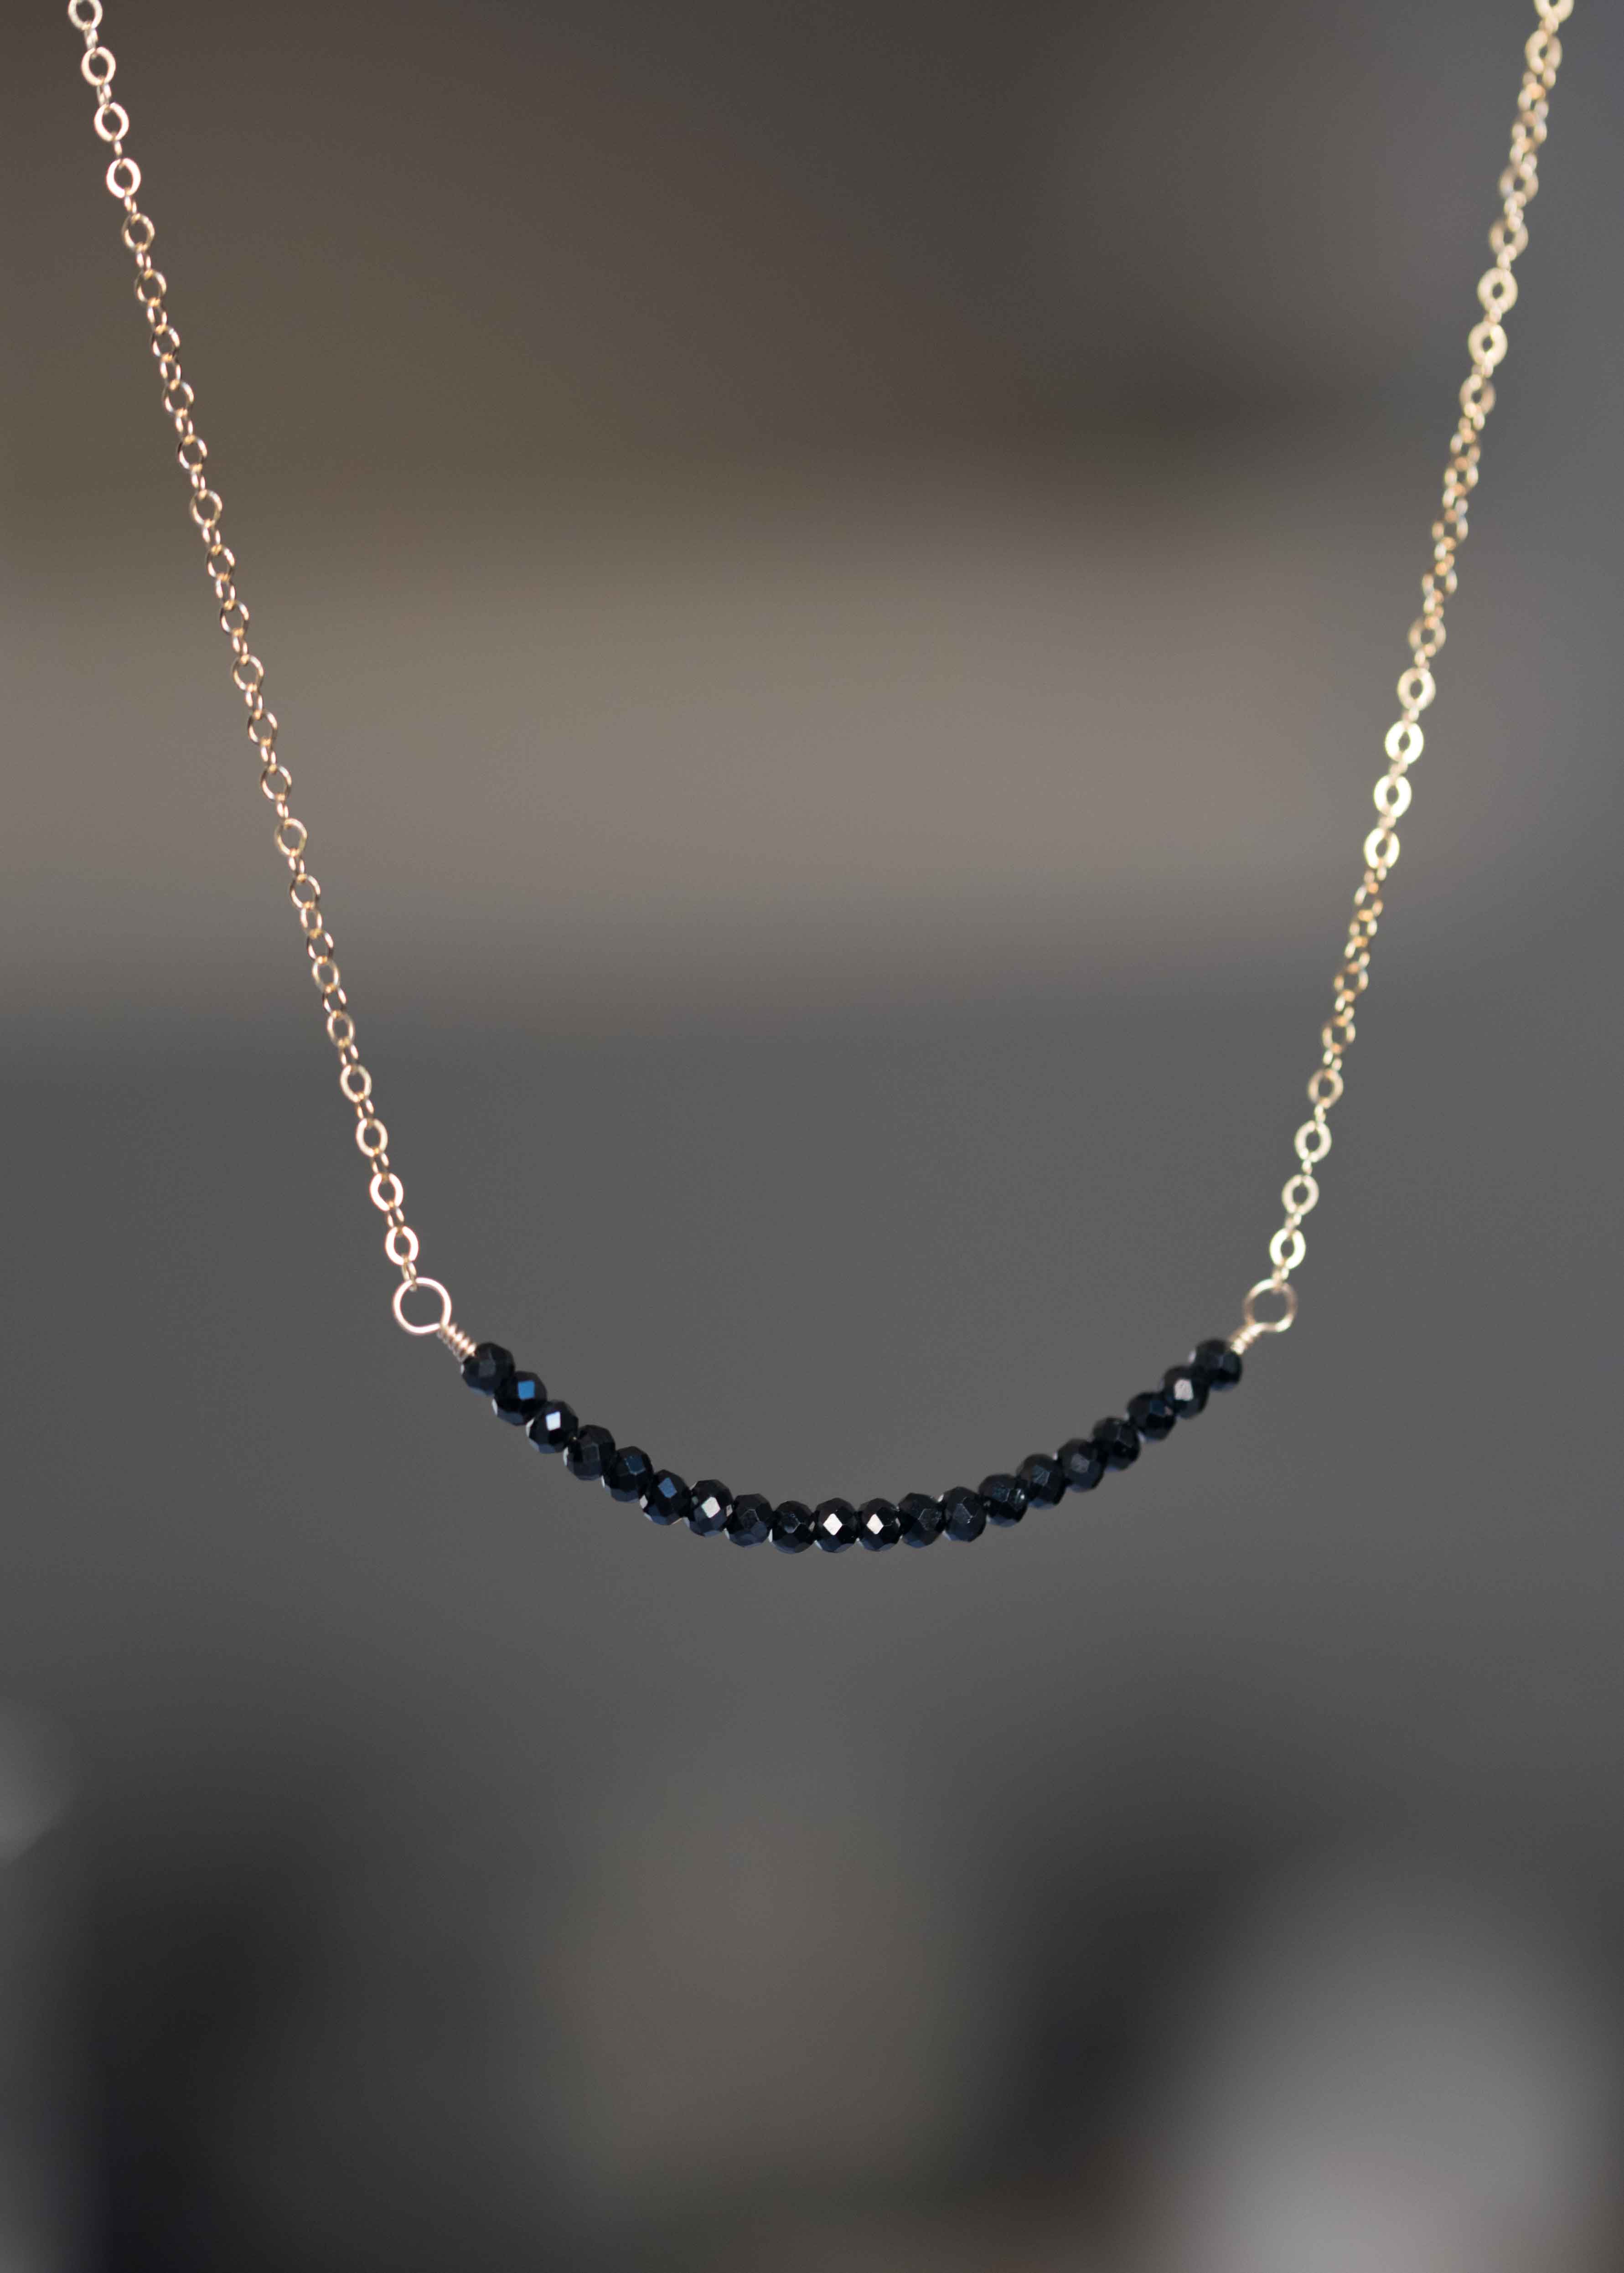 black spinel necklace gold delicate minimal choker gift for girls